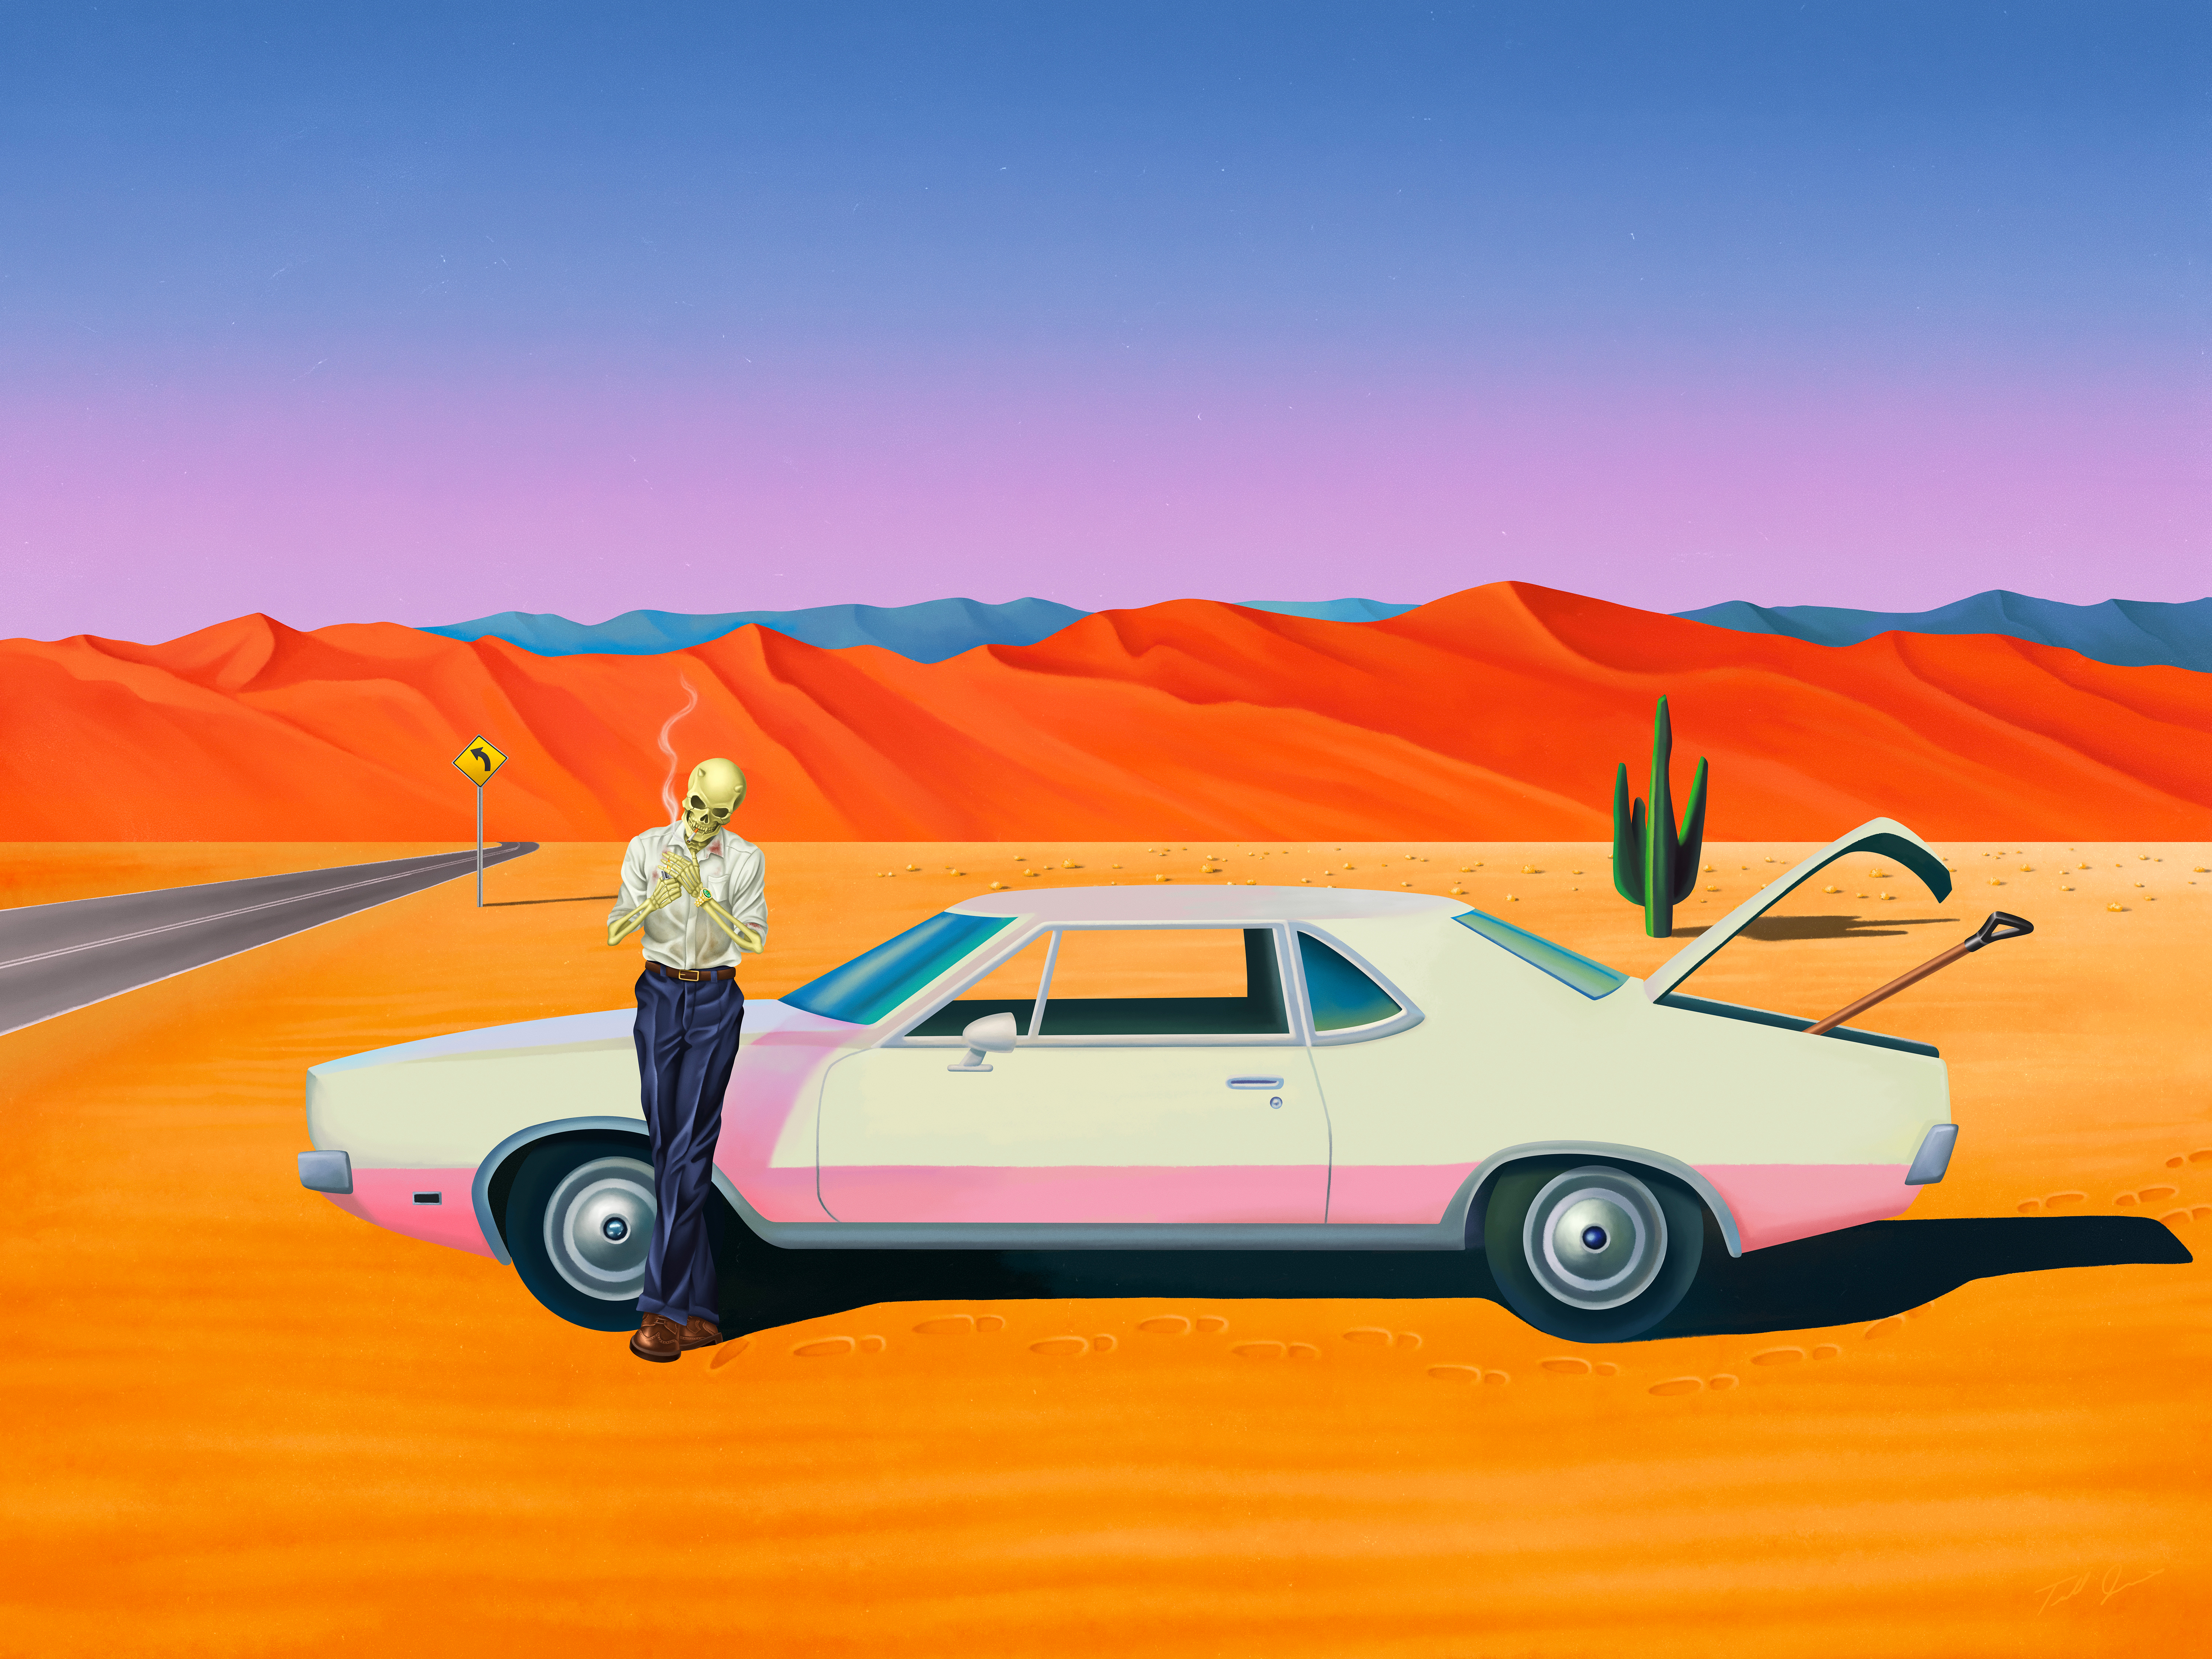 Digital Art Artwork Illustration Concept Art Desert Vehicle Skeleton Landscape Dunes Smoking Road Co 6000x4500